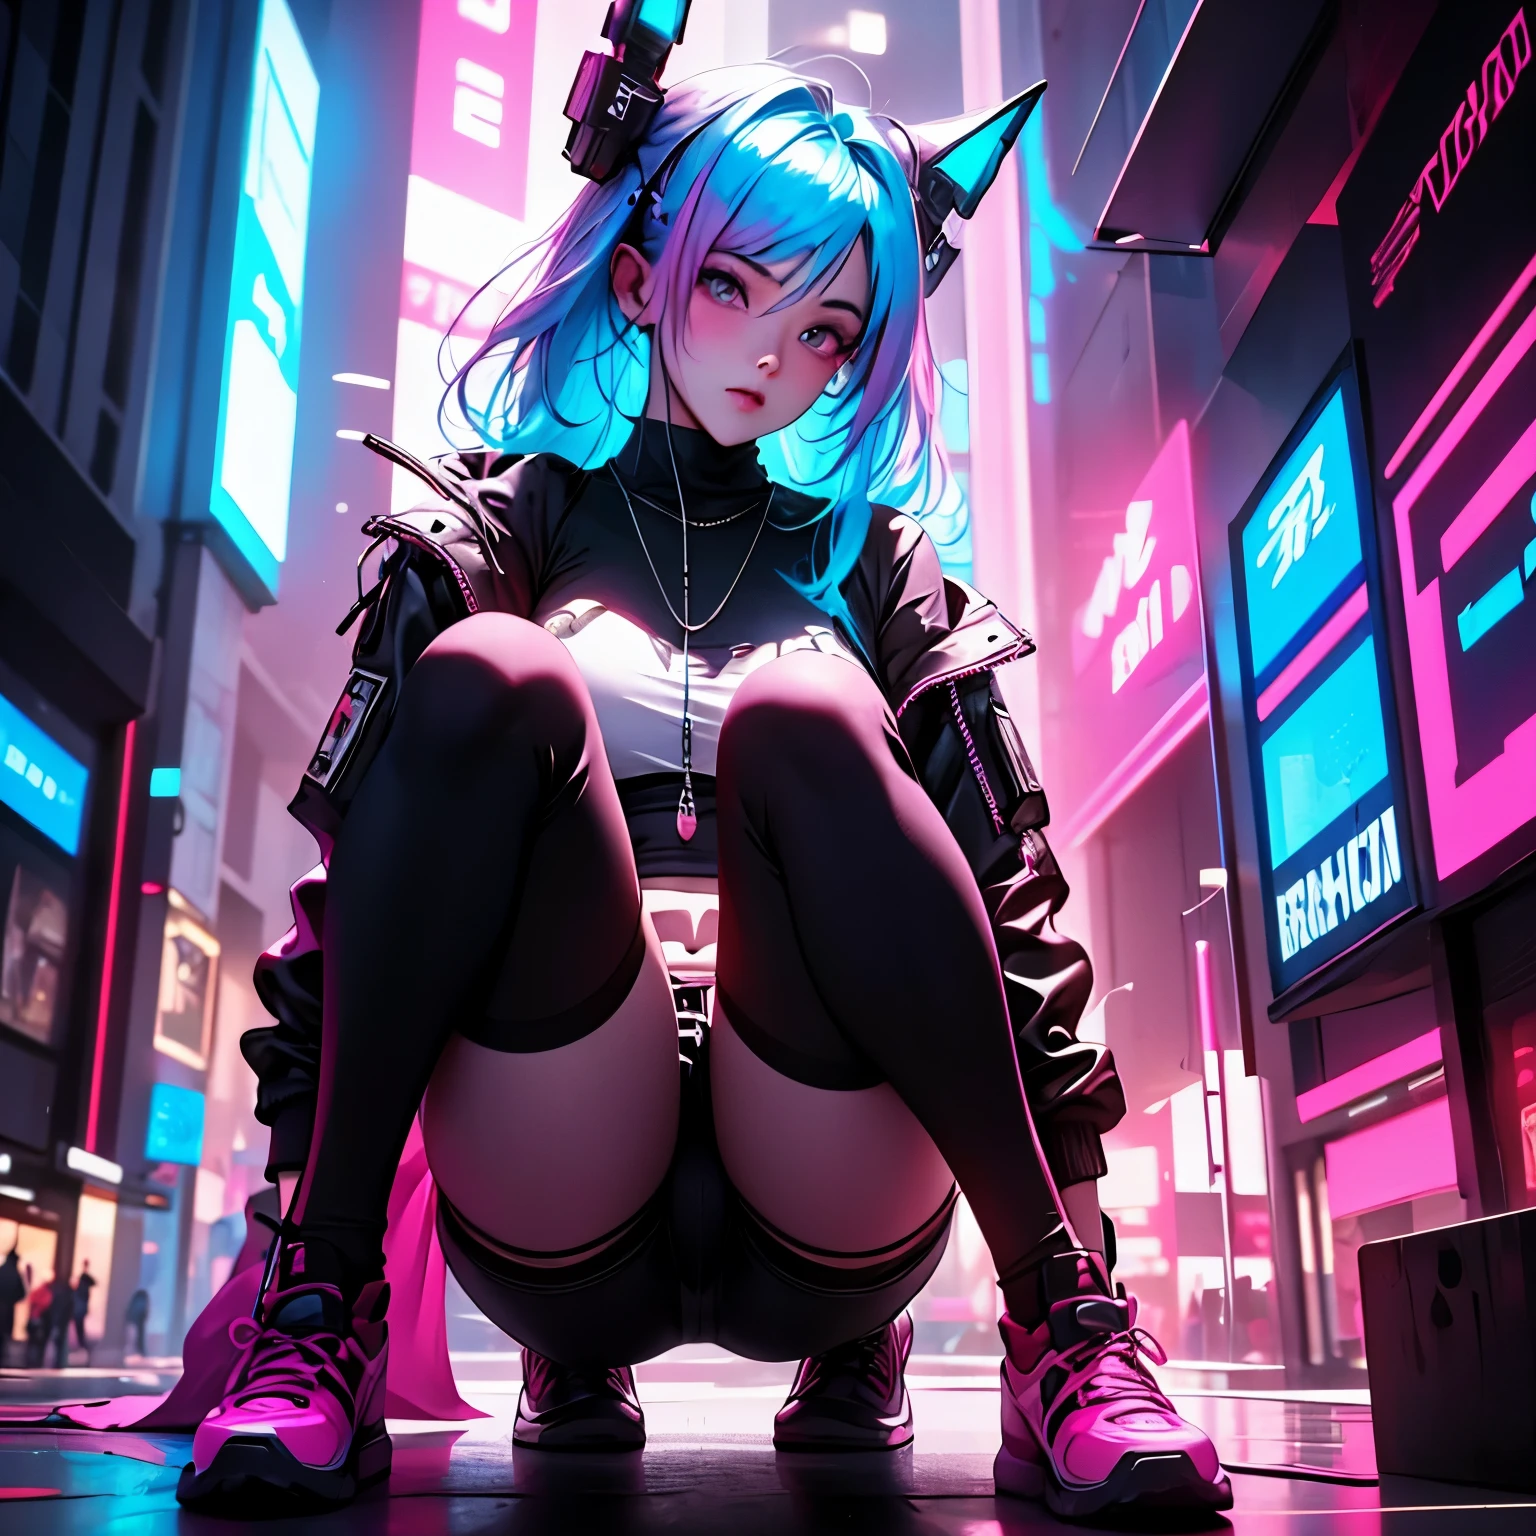 a woman with blue hair and pink panties sitting on the floor, oppai cyberpunk, brilho cyberpunk brilhante, Cyberpunk 2 0 e. o modelo menina, retrato da menina de glowwave,  cyberpunk sonhadora, luz neon e fantasia, Digital Cyberpunk - Arte de Anime, em cyberpunk city, pele neon brilhante, cyberpunk vibes, Anime estilo 3D, estilo cyberpunk hiper-realista, topless